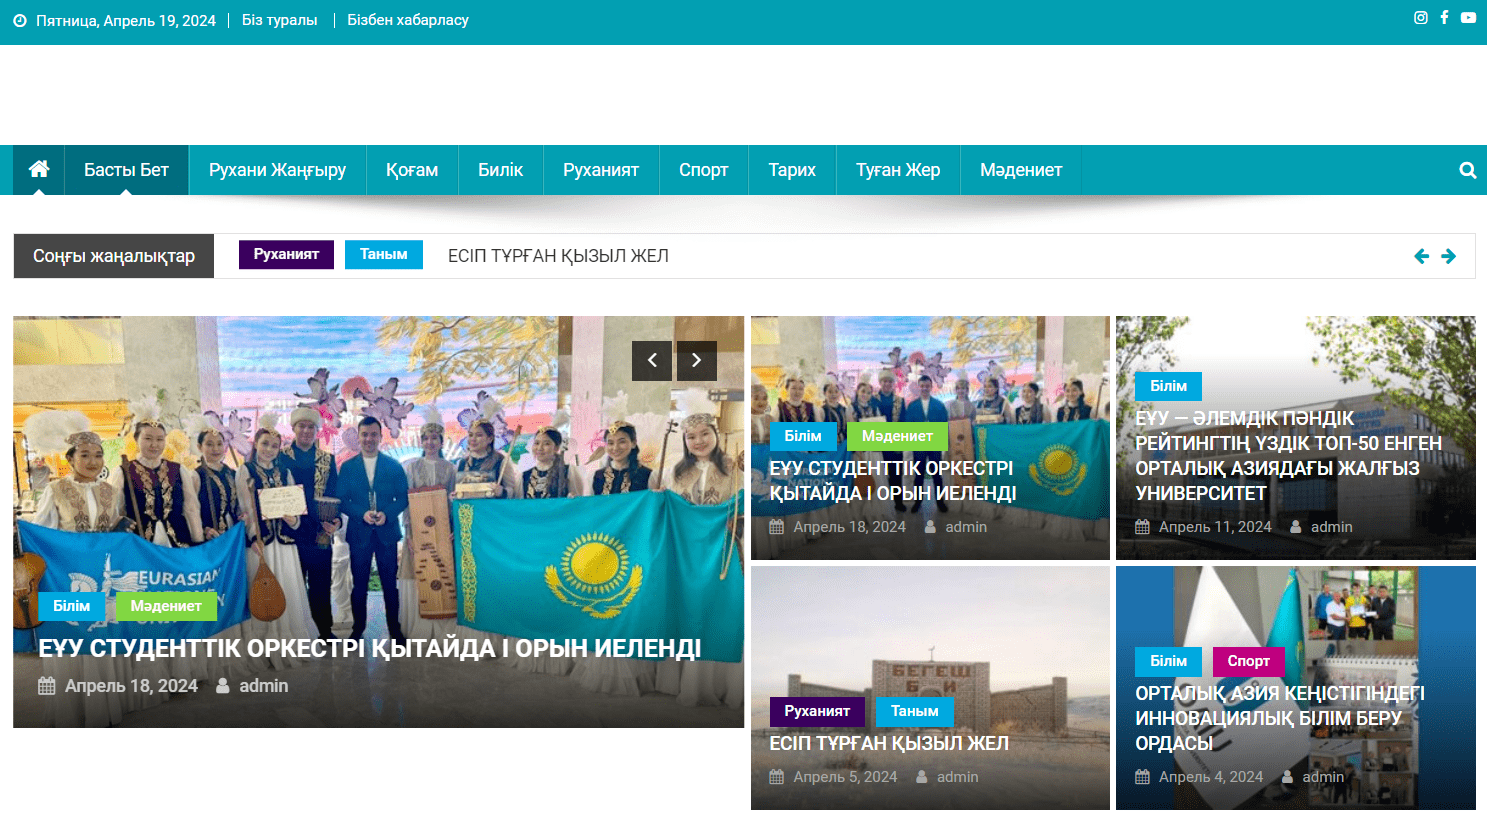 Әділет газеті (adilet-gazeti.kz) - официальный сайт